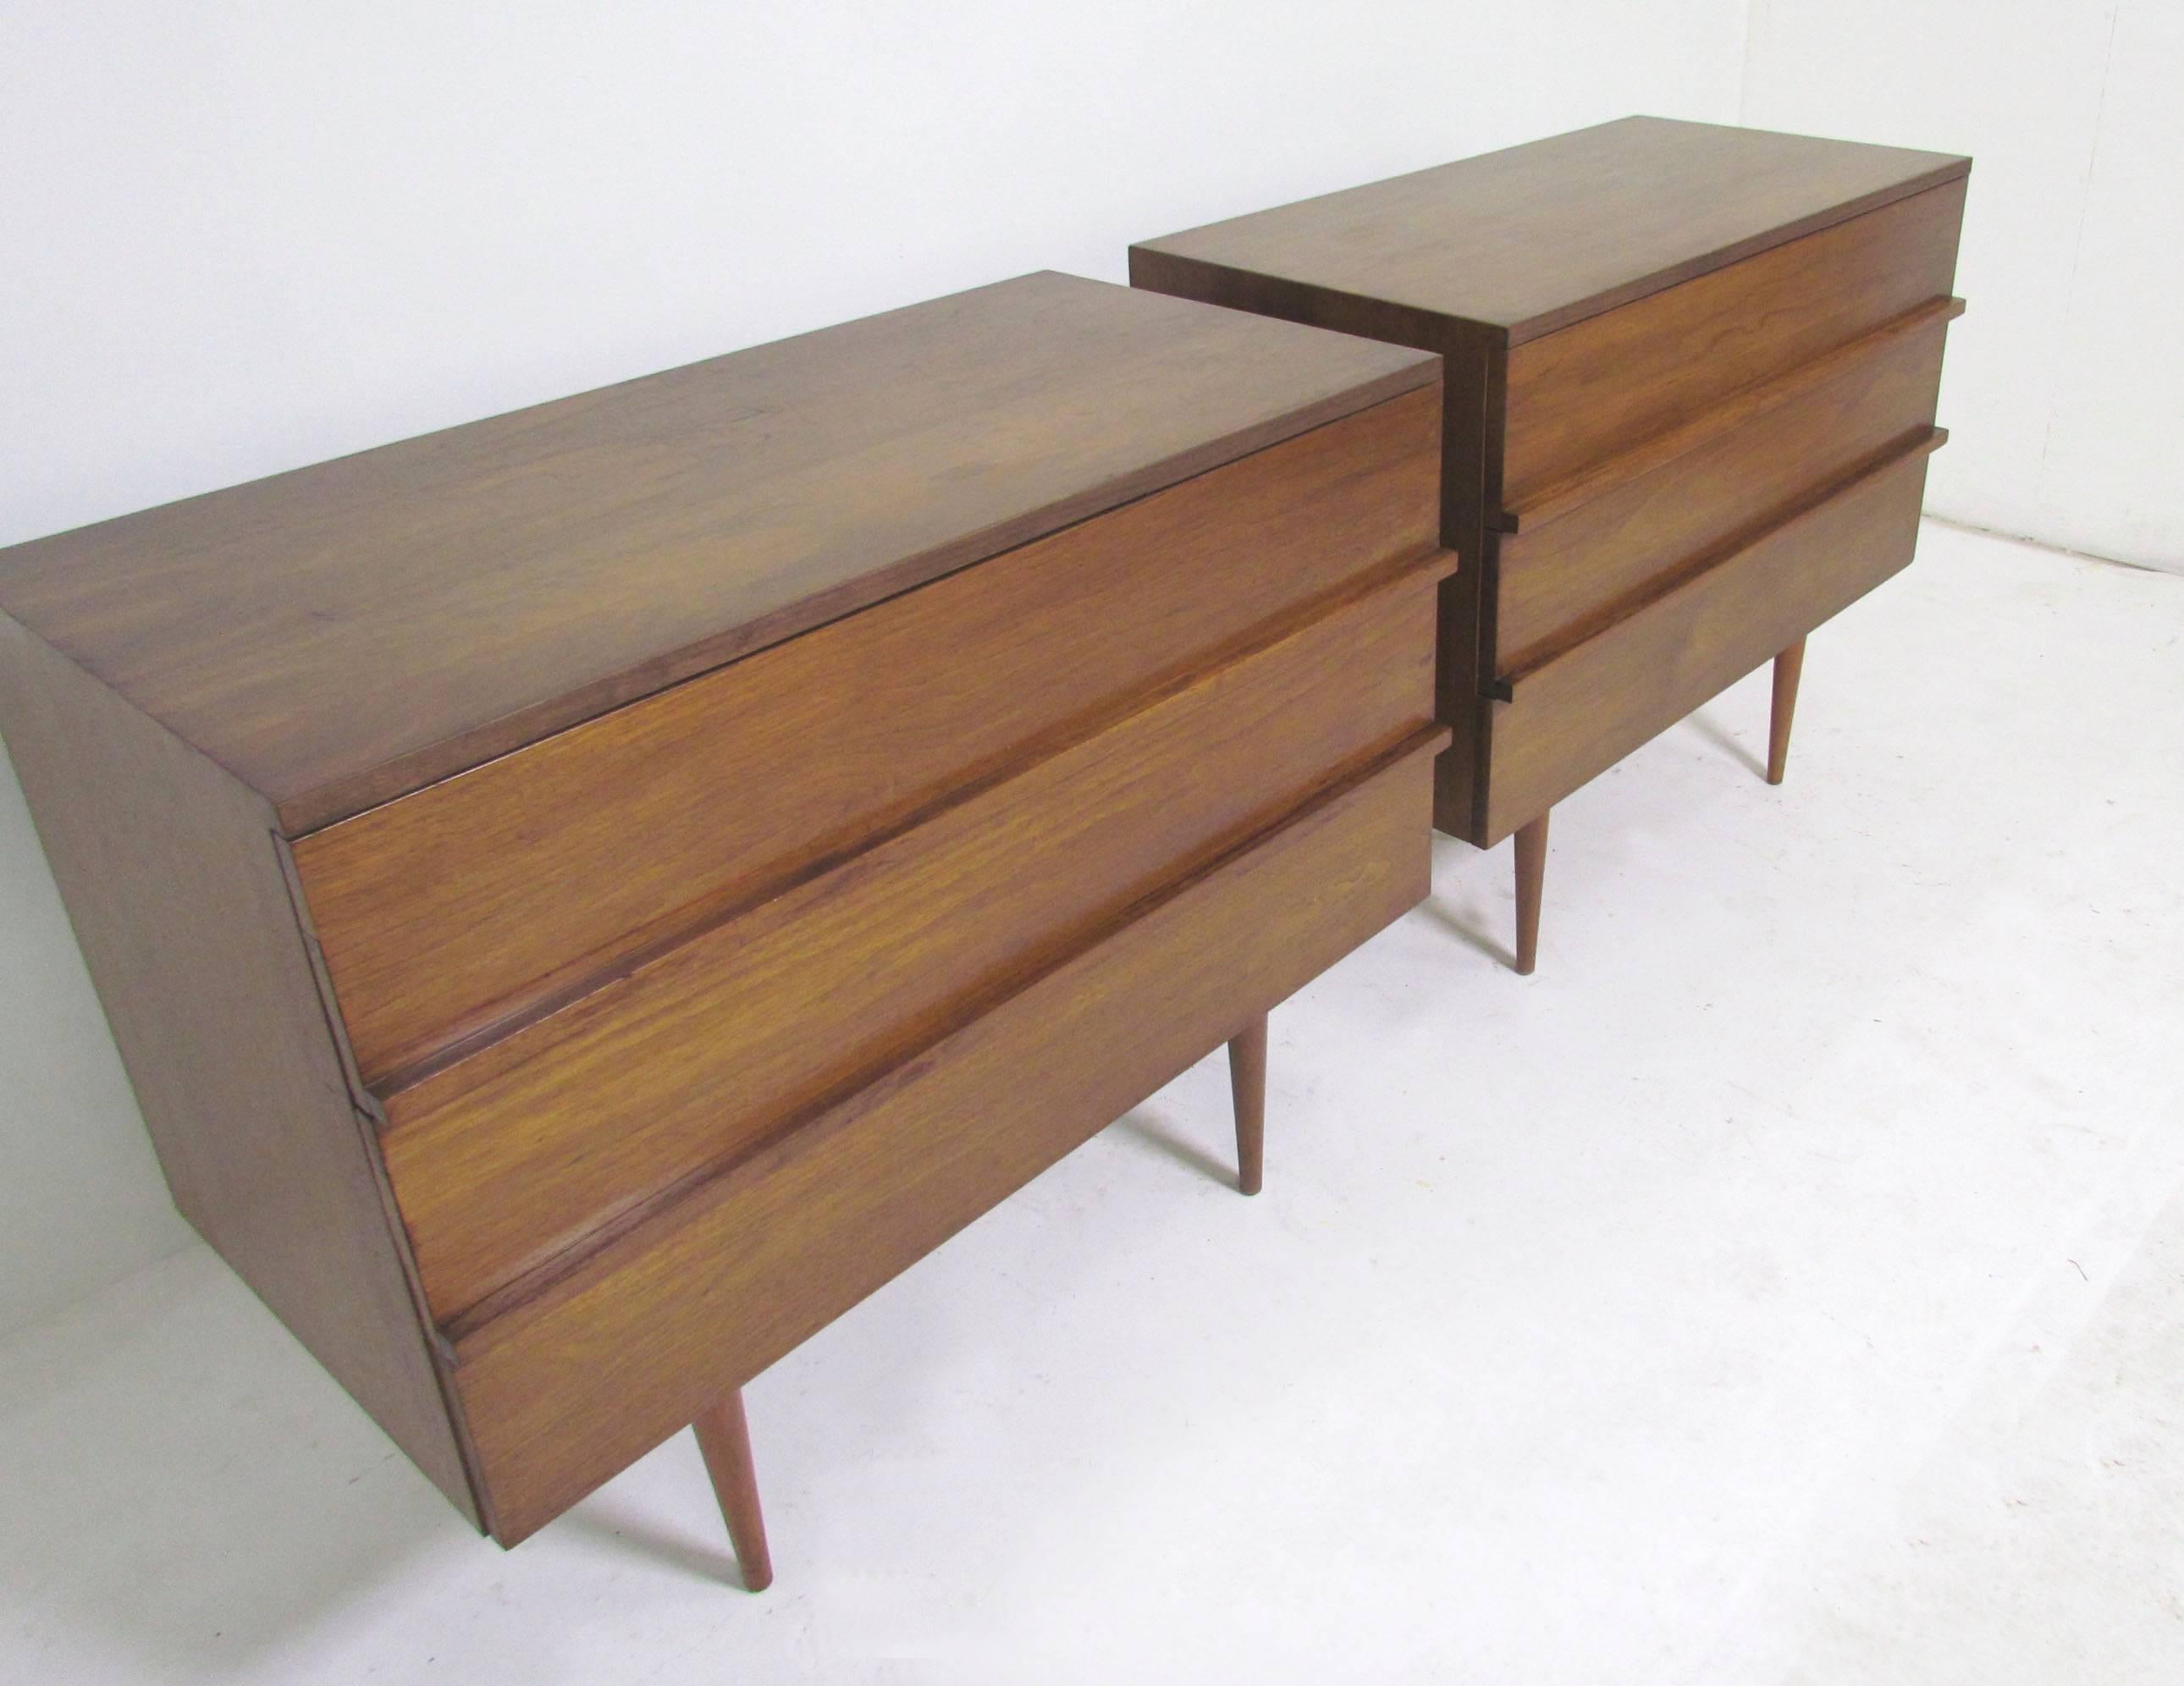 Pair of three-drawer chests in walnut, circa 1960s.